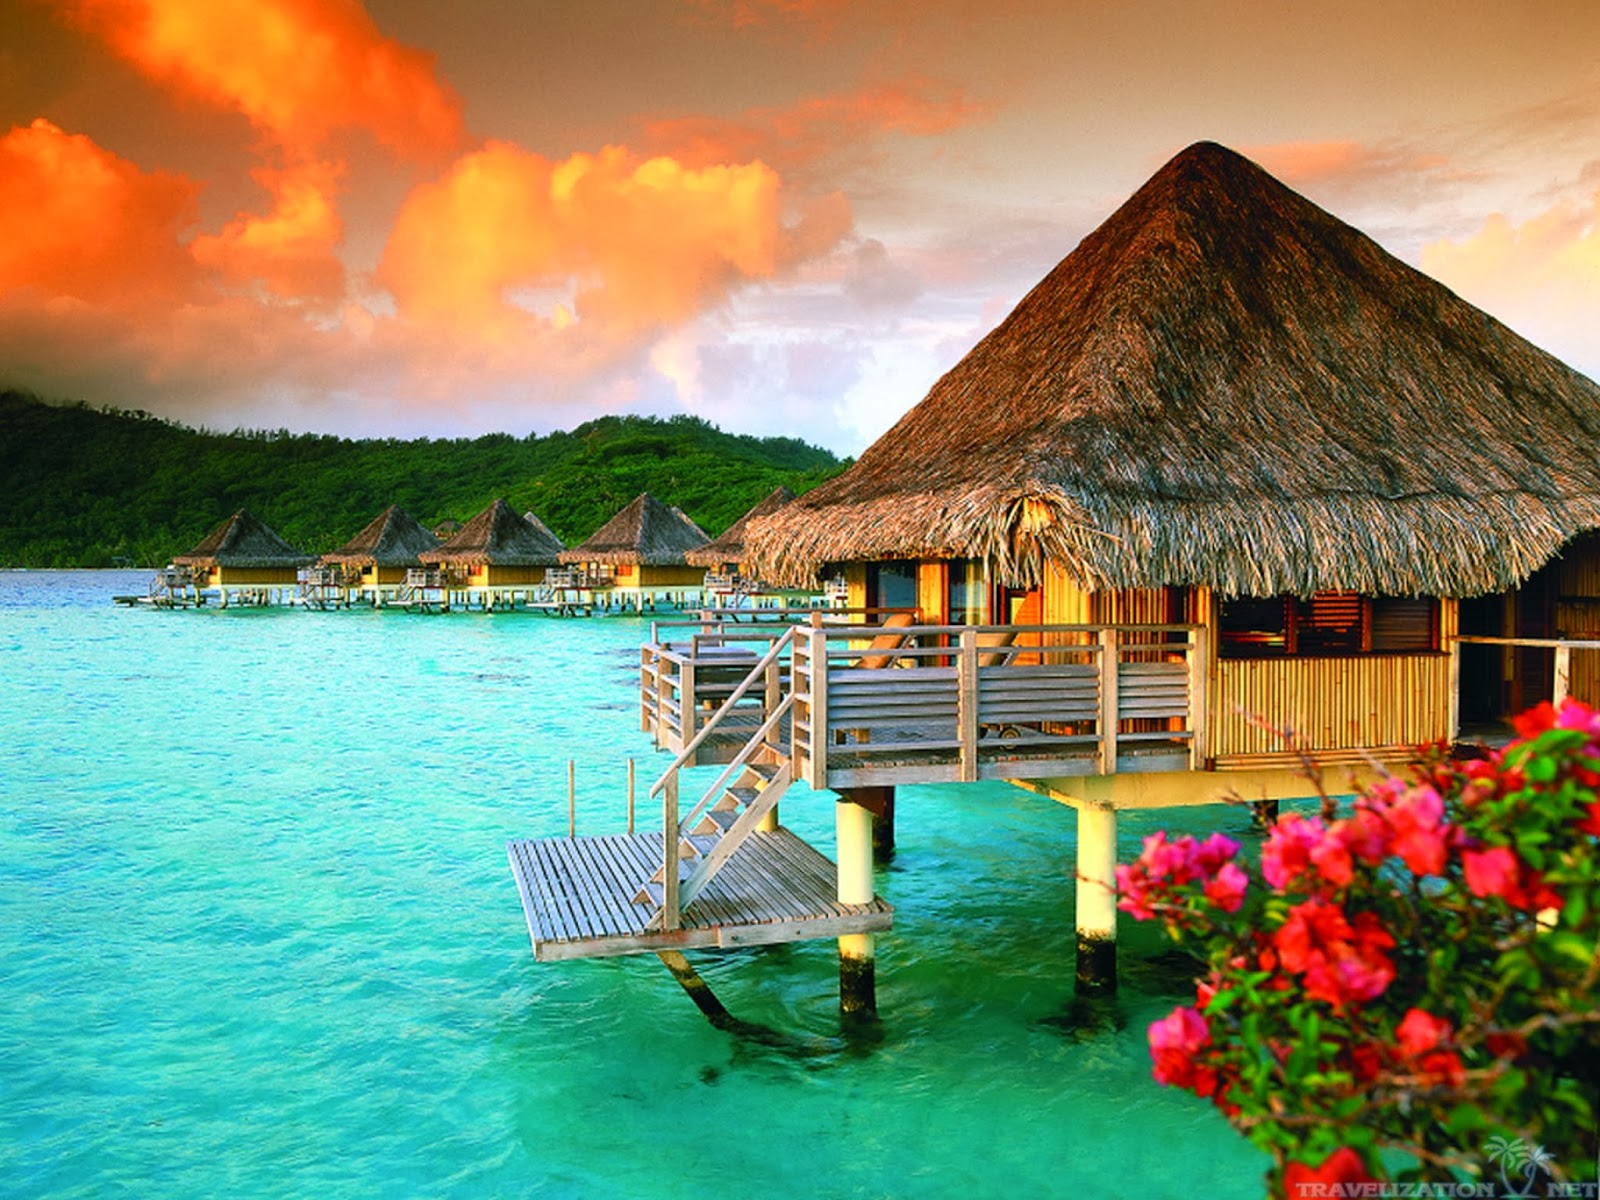 Wallpaper Beauty Of Nature Tahiti Islands Resort Is A World Best